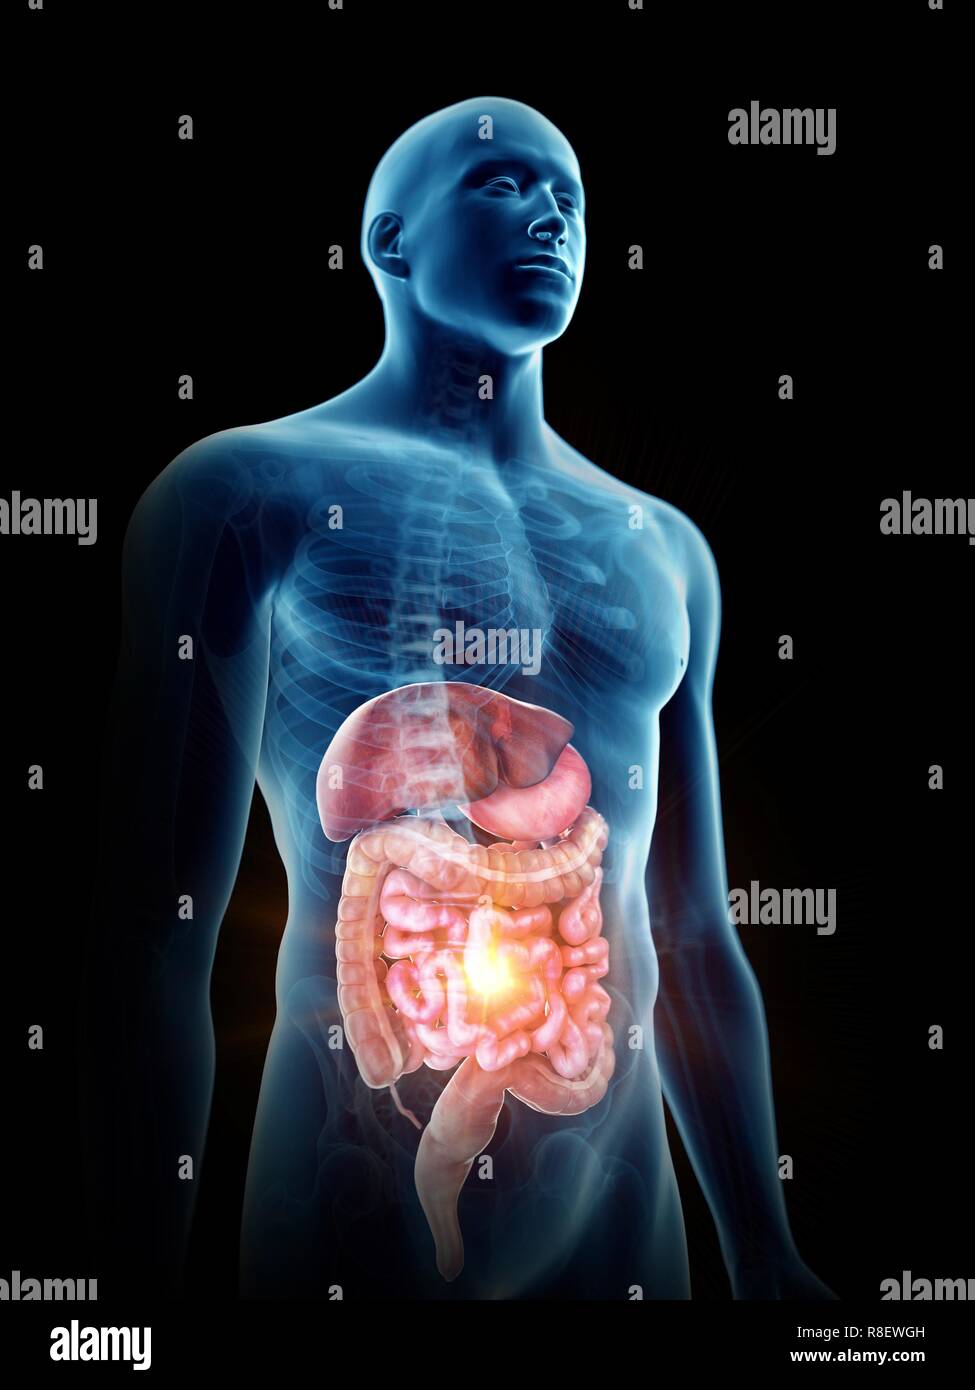 Illustration of a painful digestive system Stock Photo - Alamy